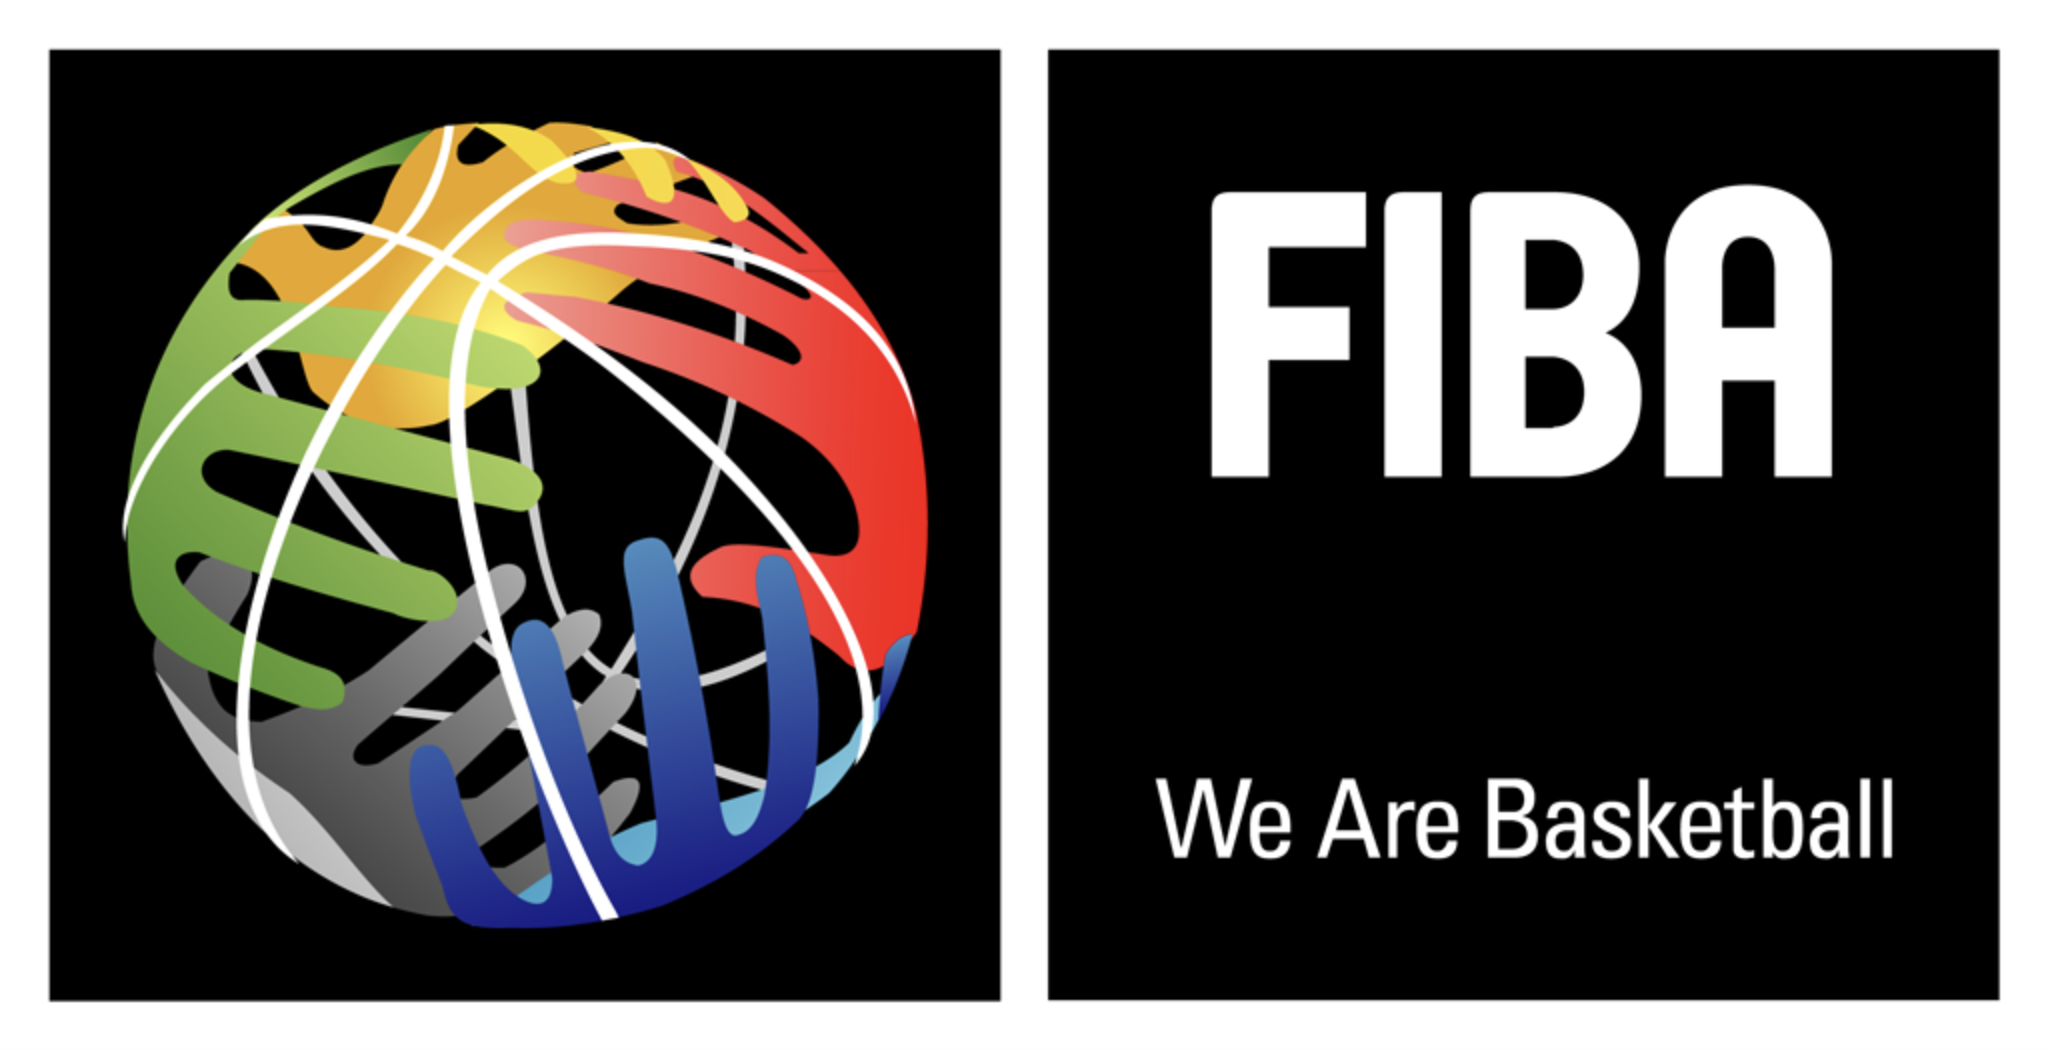 FECC þjálfaranám FIBA - umsóknarfrestur